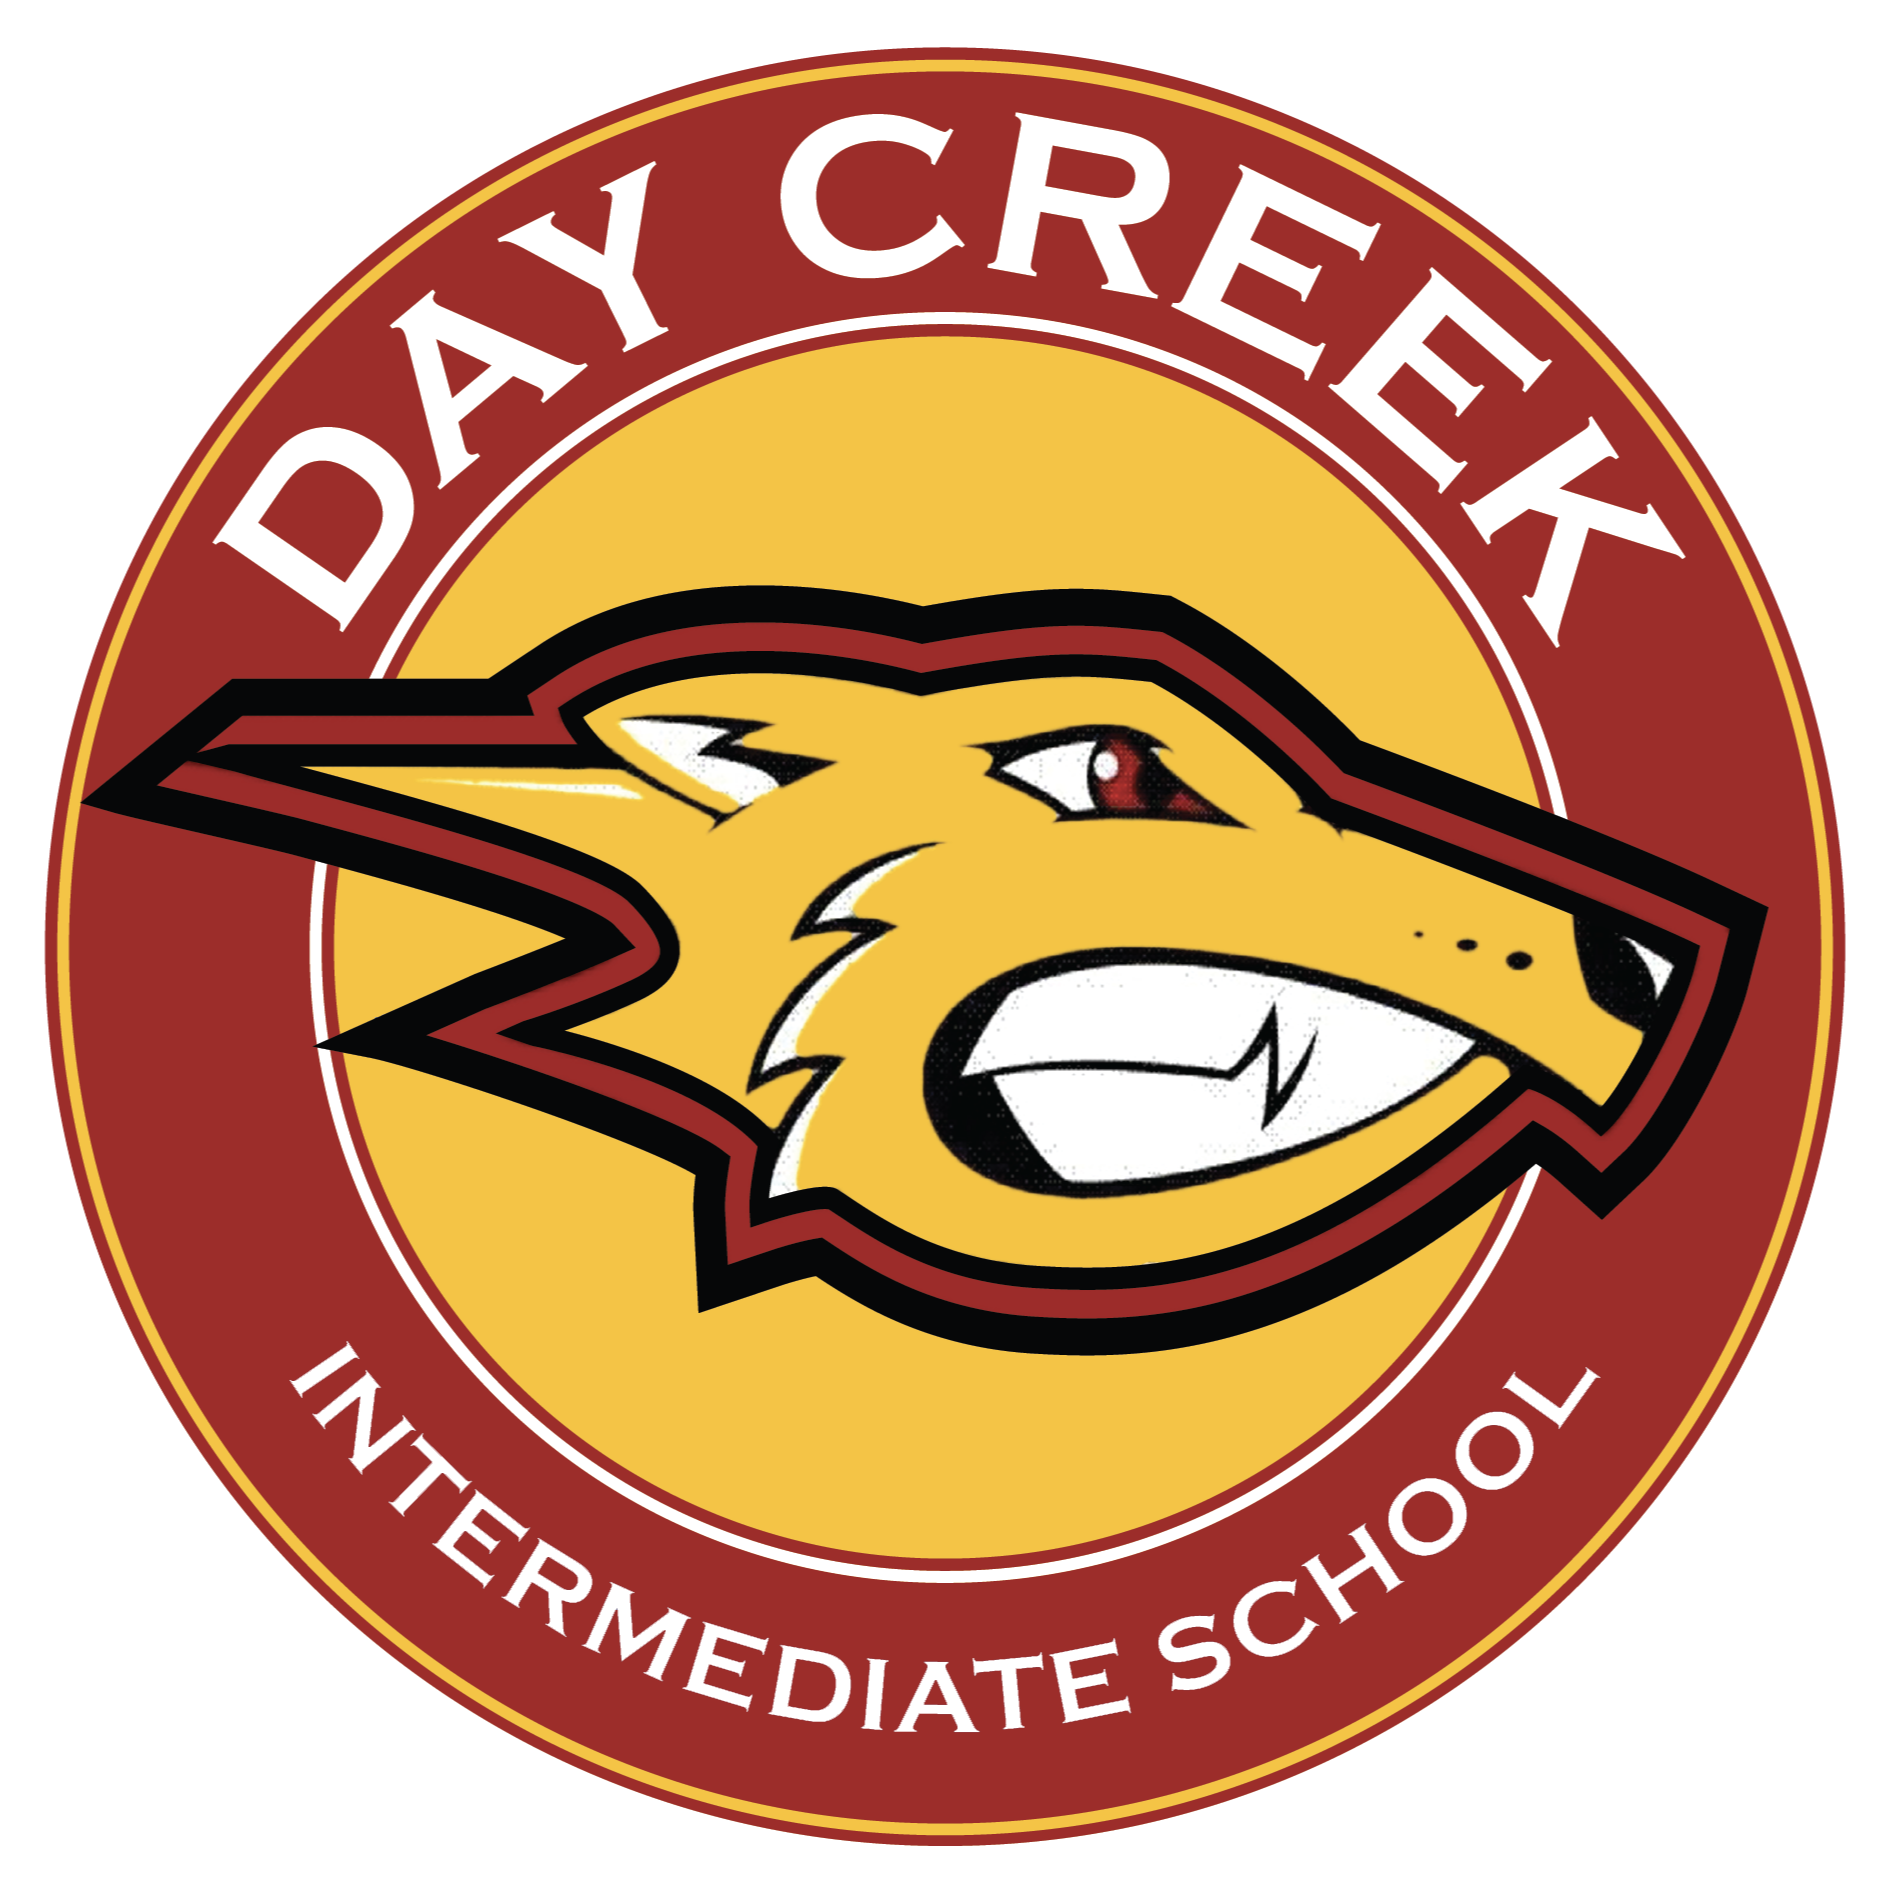 day creek intermediate school logo 